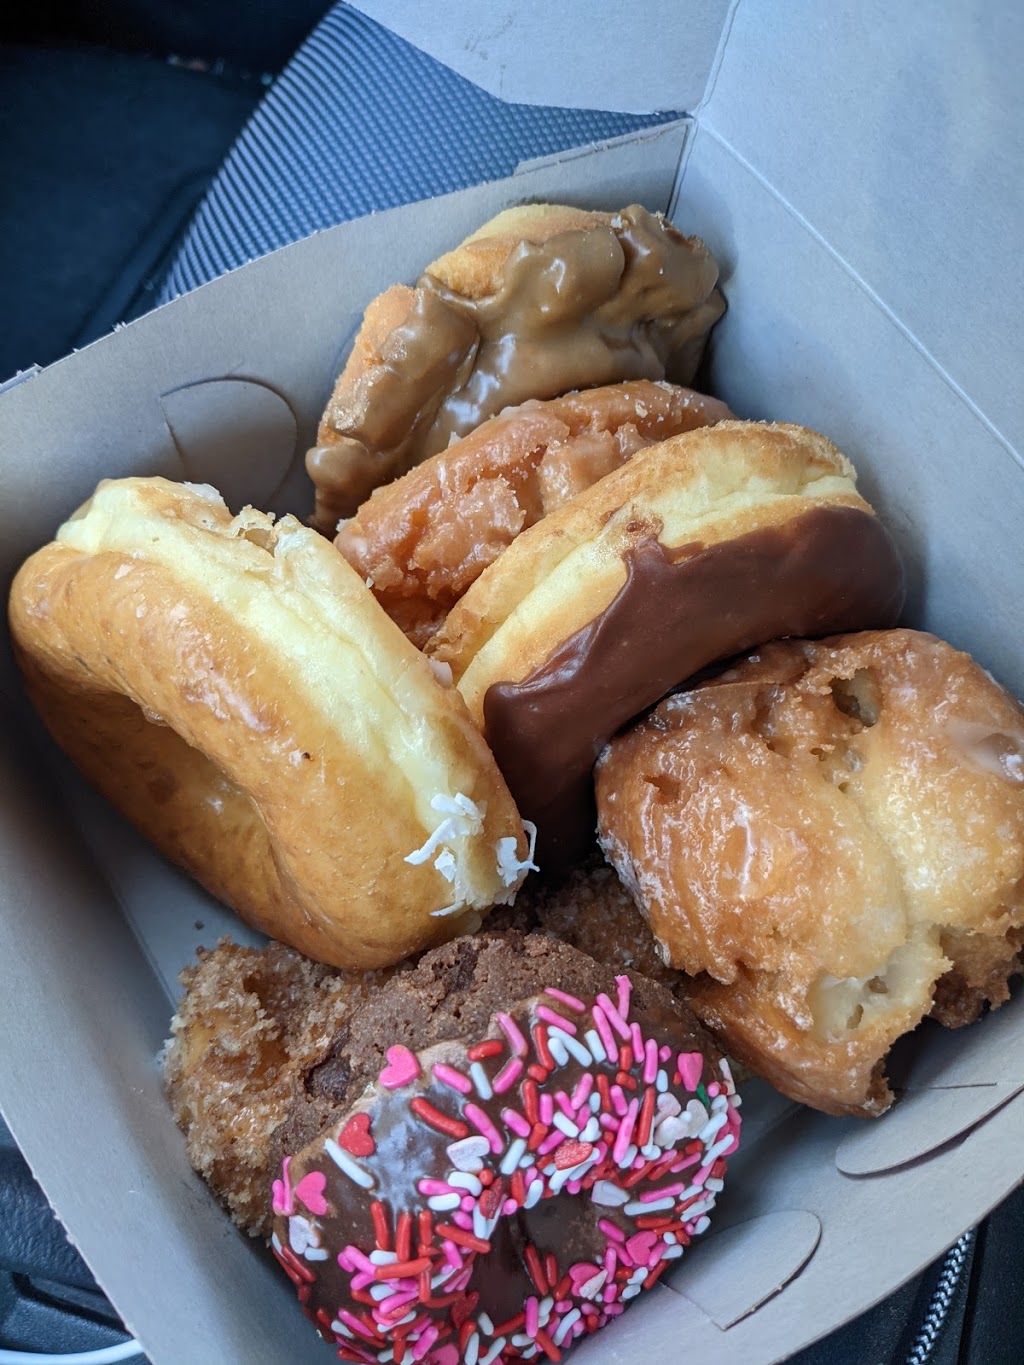 Grannys Donuts | 8534 Paramount Blvd, Downey, CA 90240, USA | Phone: (562) 928-4445